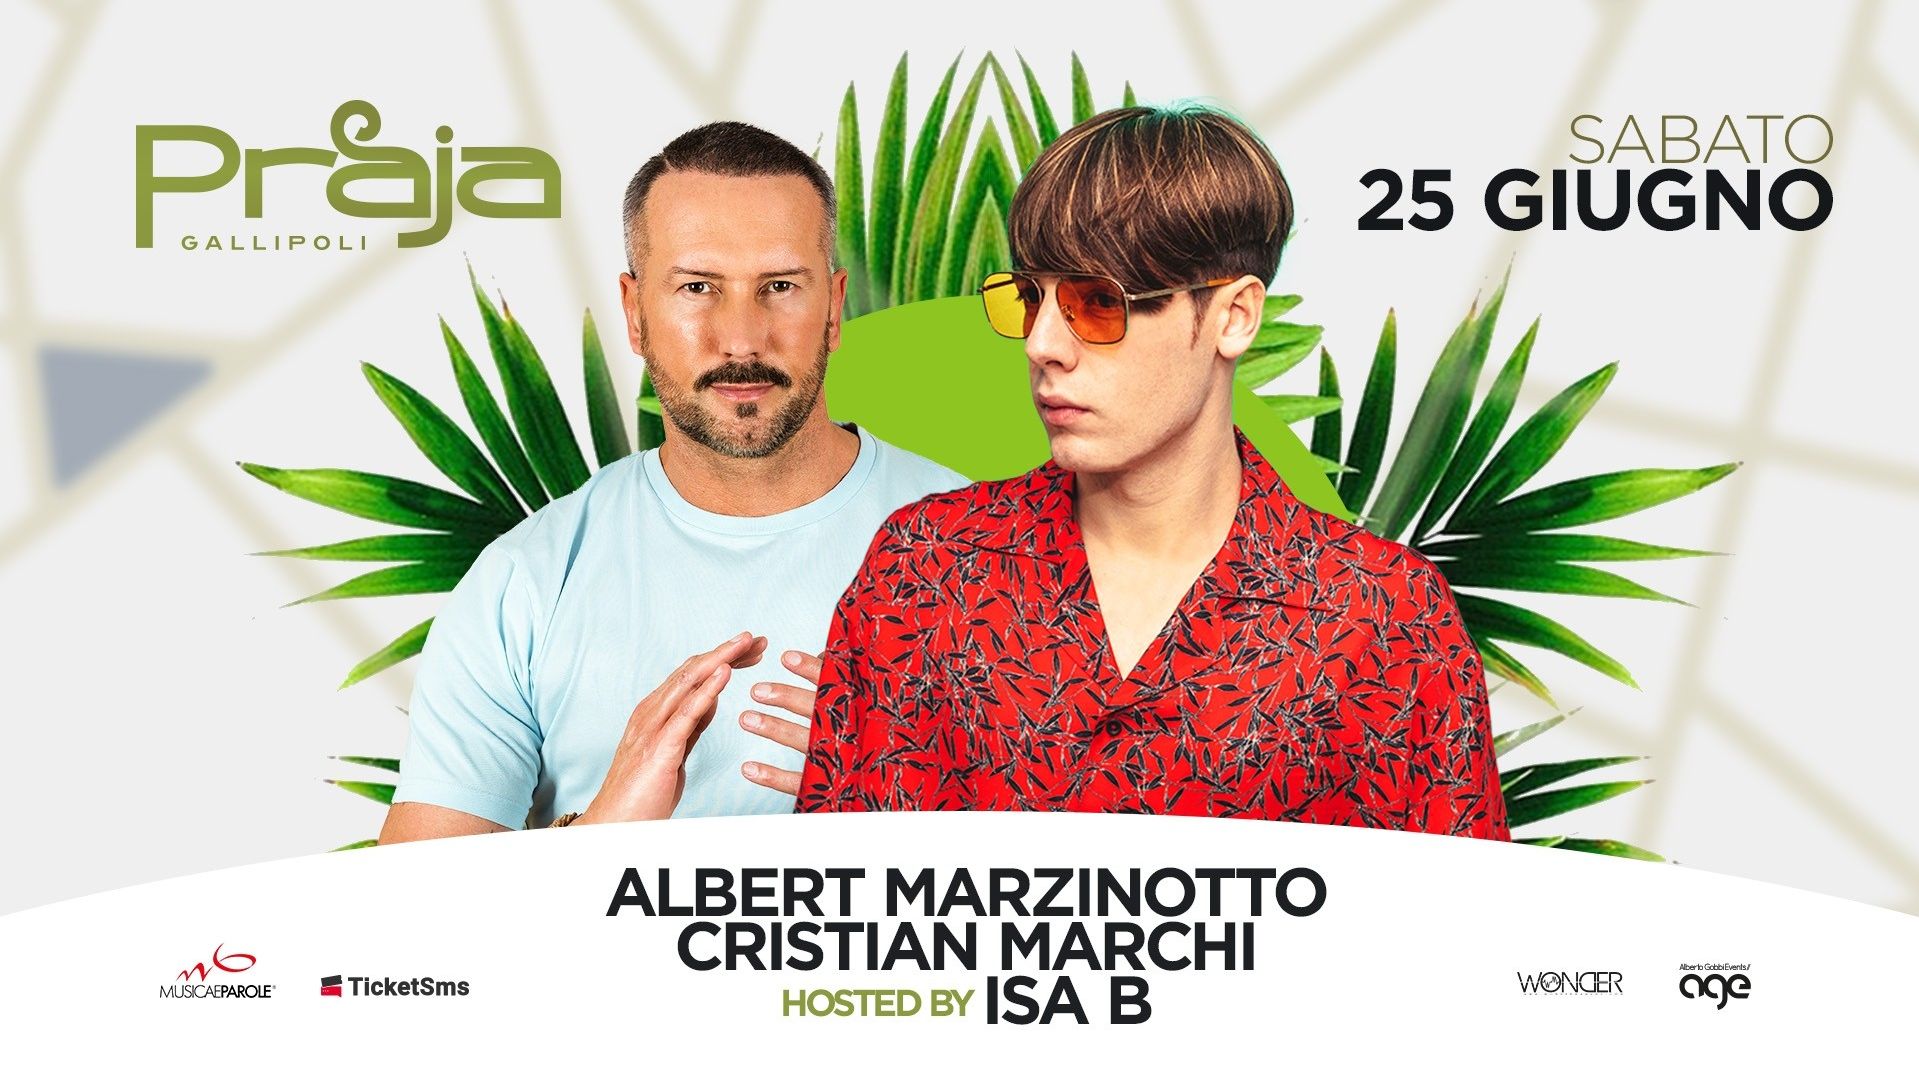 Cristian Marchi + Albert Marzinotto + Isa B